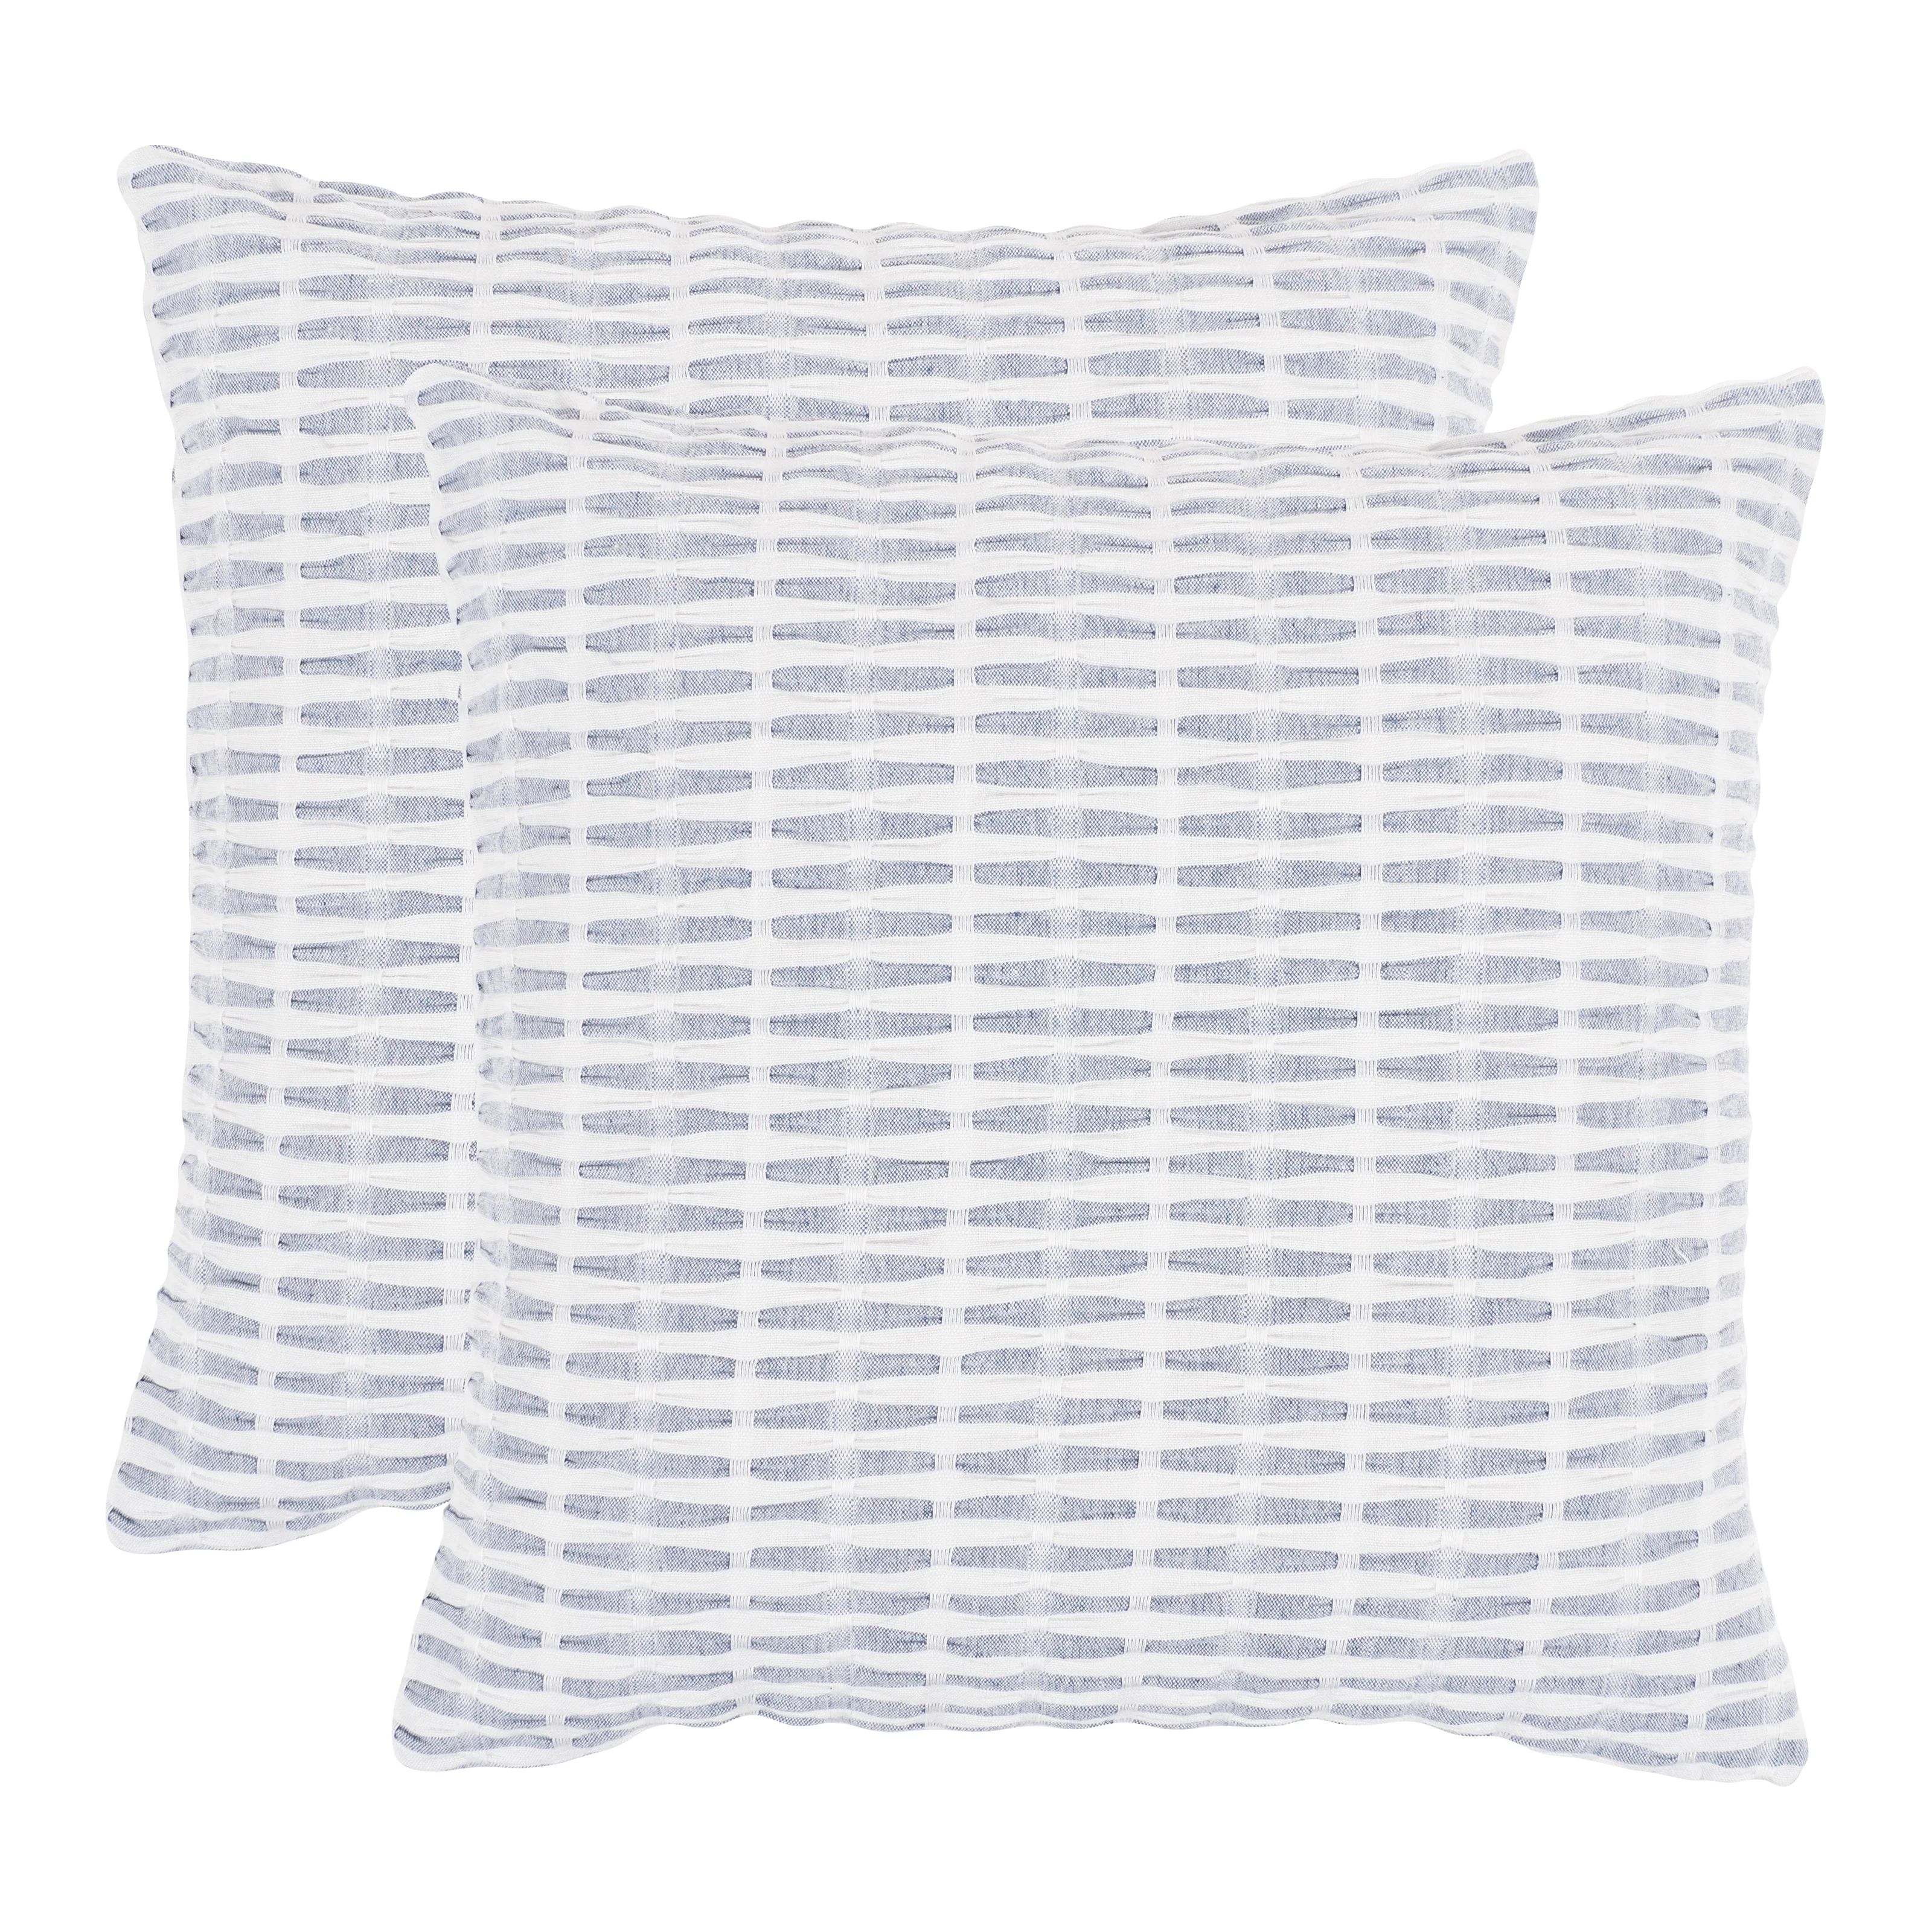 Kohlmeier Square Cotton Pillow Cover | Wayfair North America